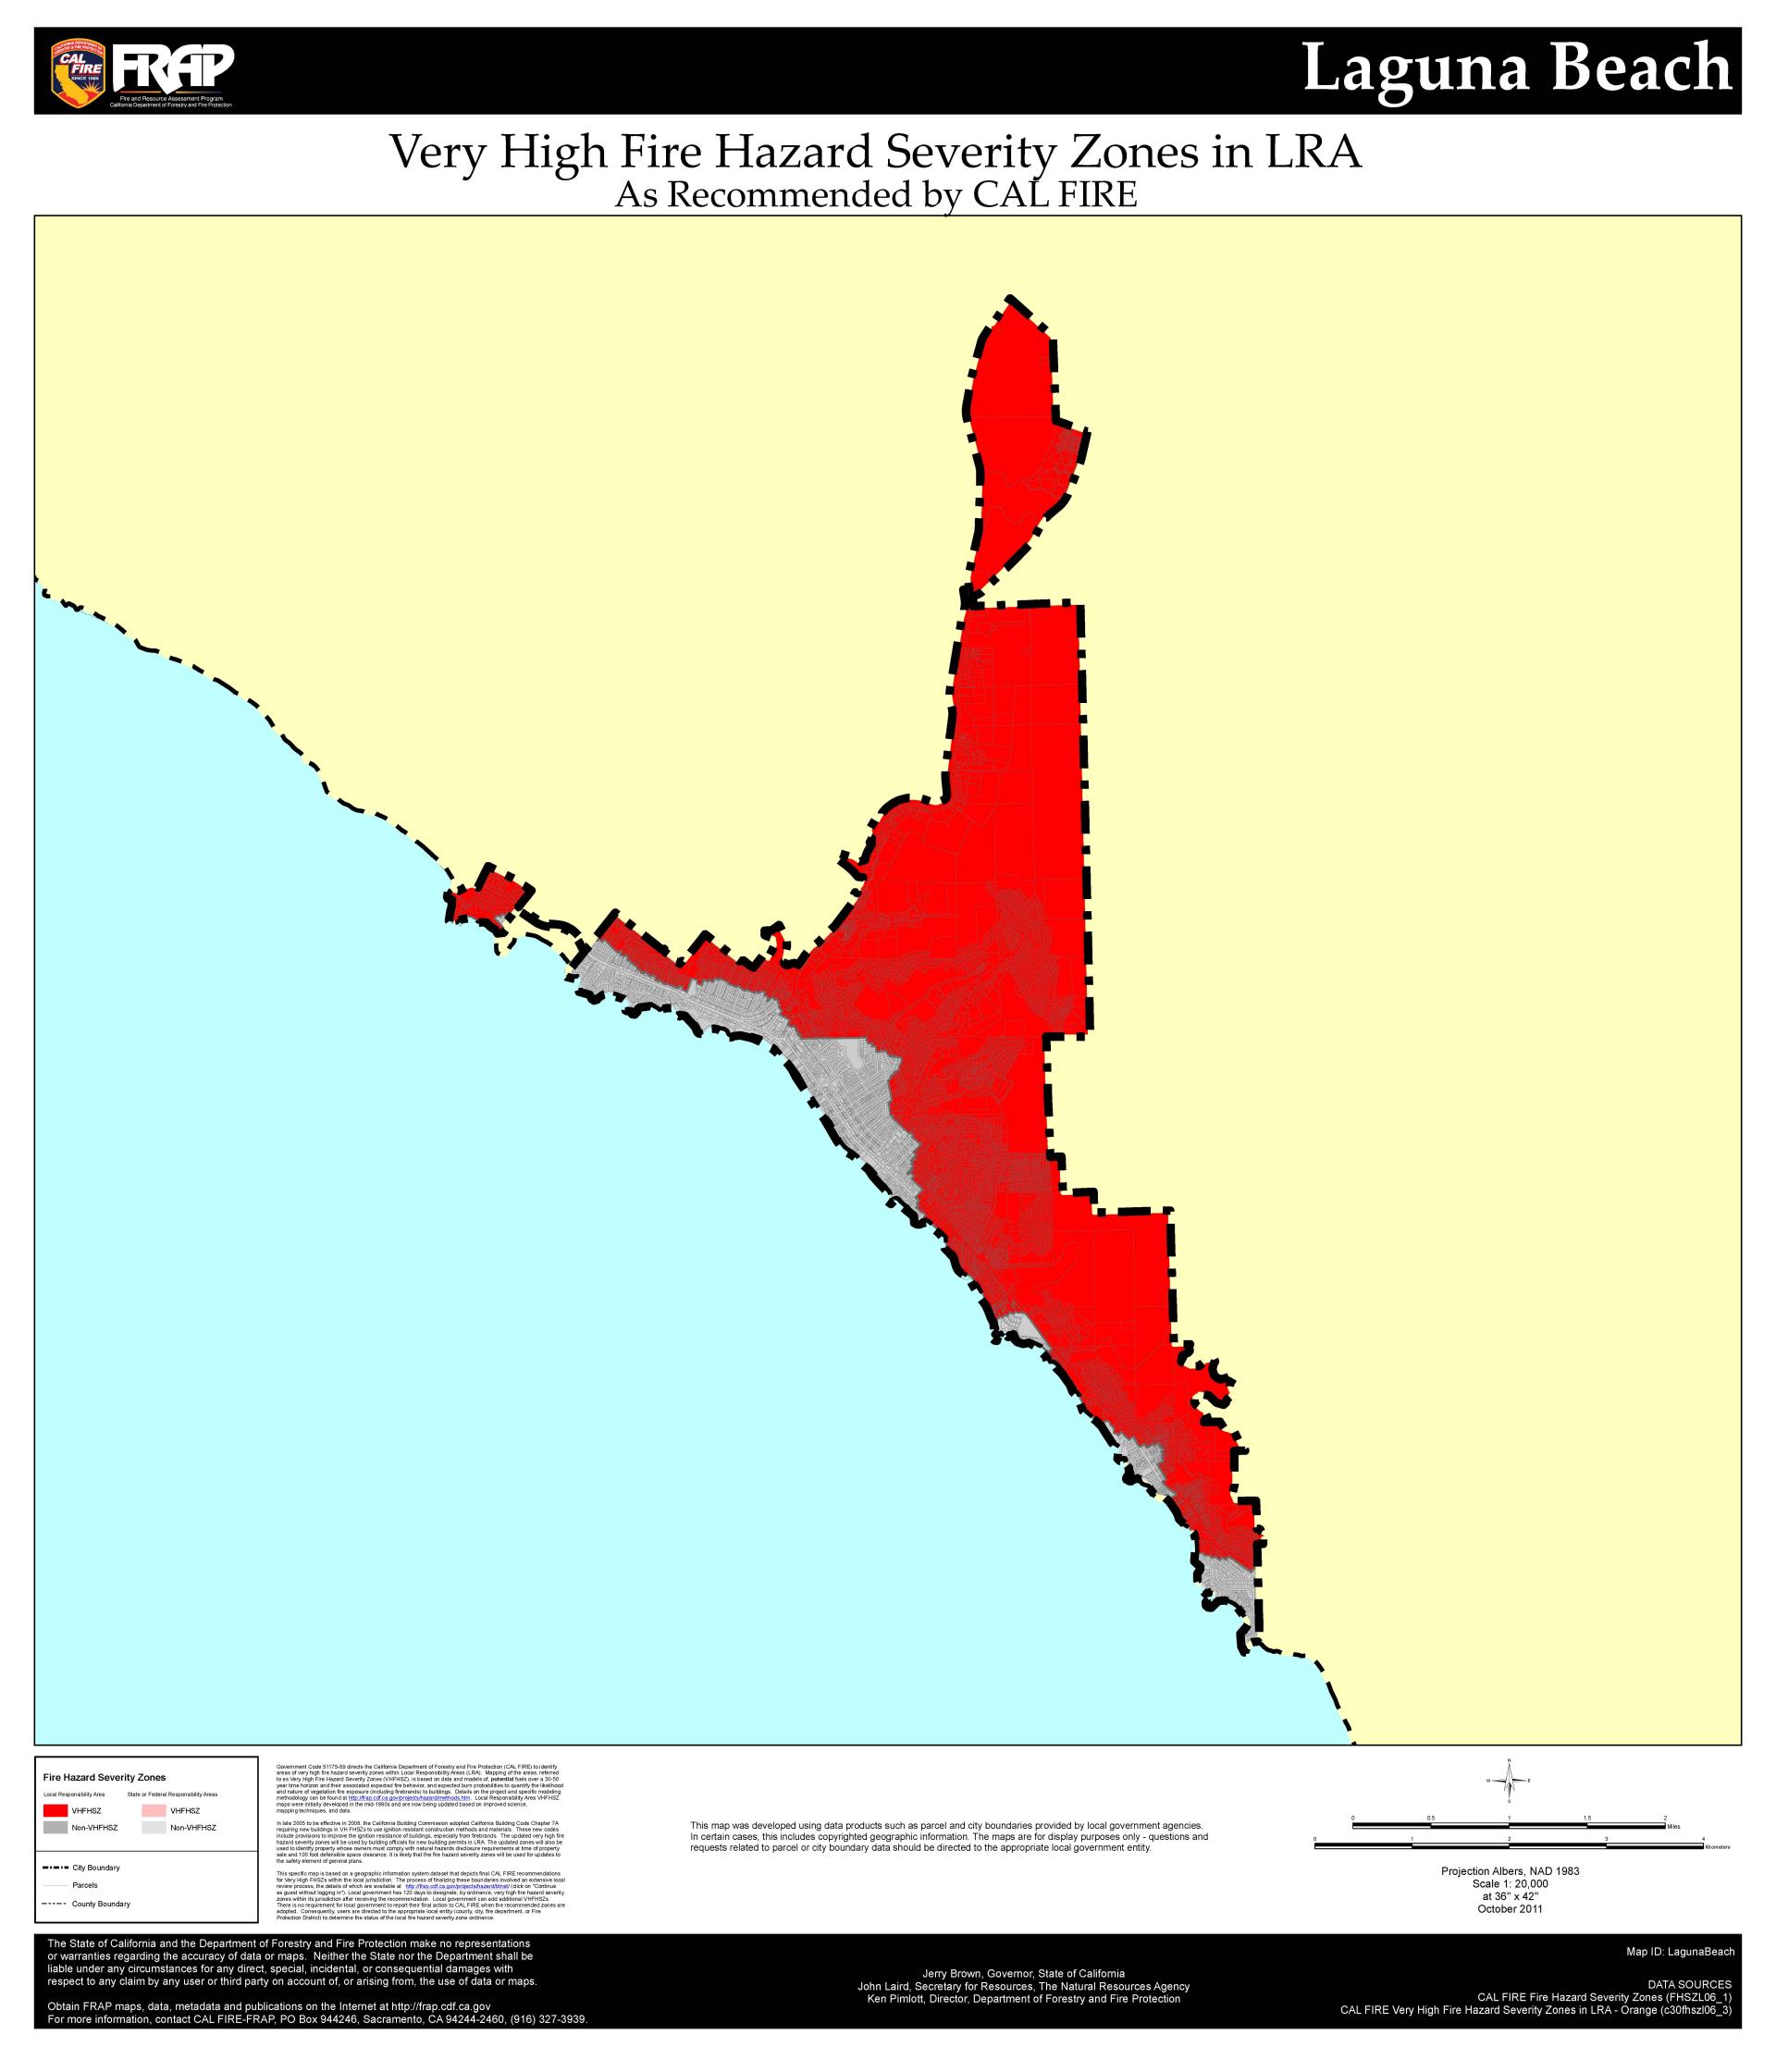 Laguna Beach - Very High Fire Hazard Severity Zone Map